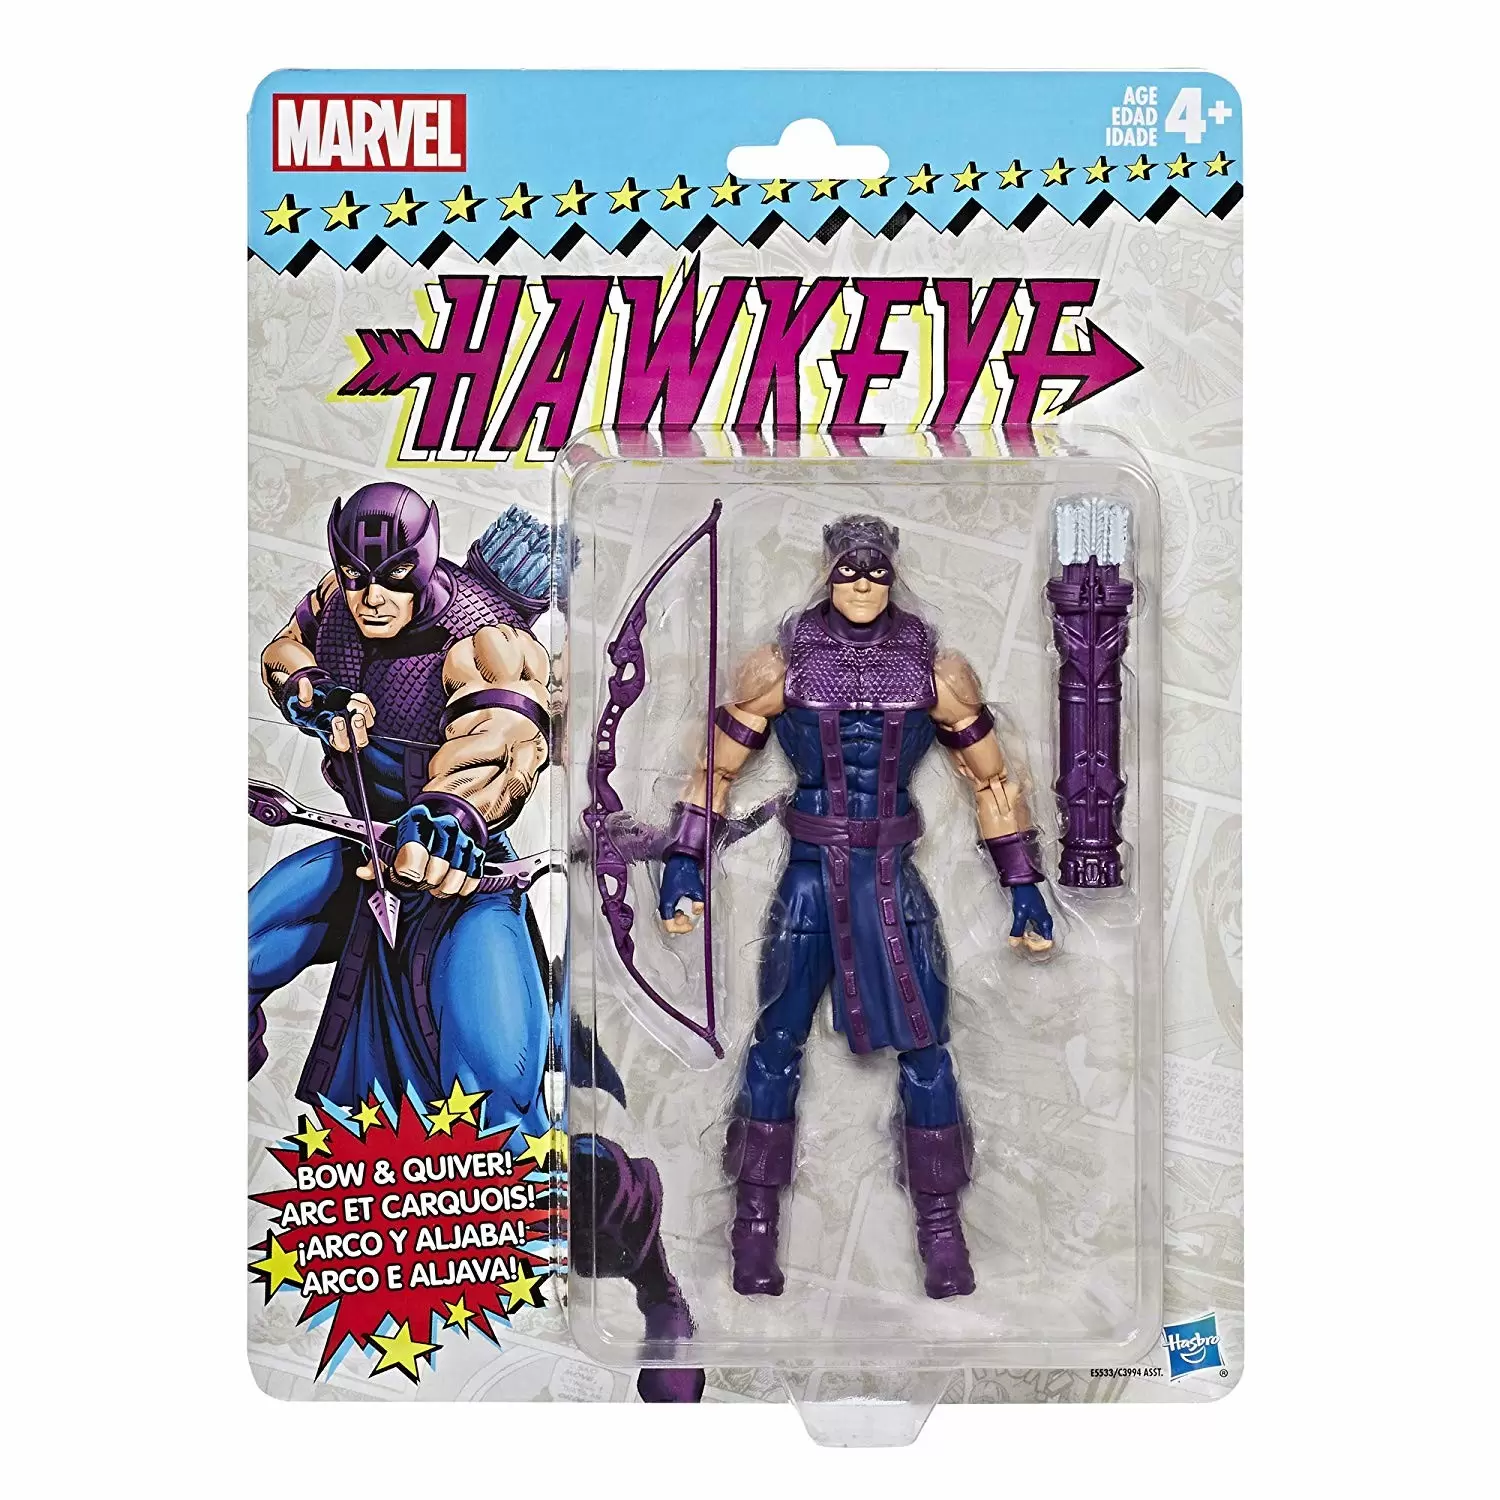 Marvel Legends 6 inch Retro Collection - Hawkeye